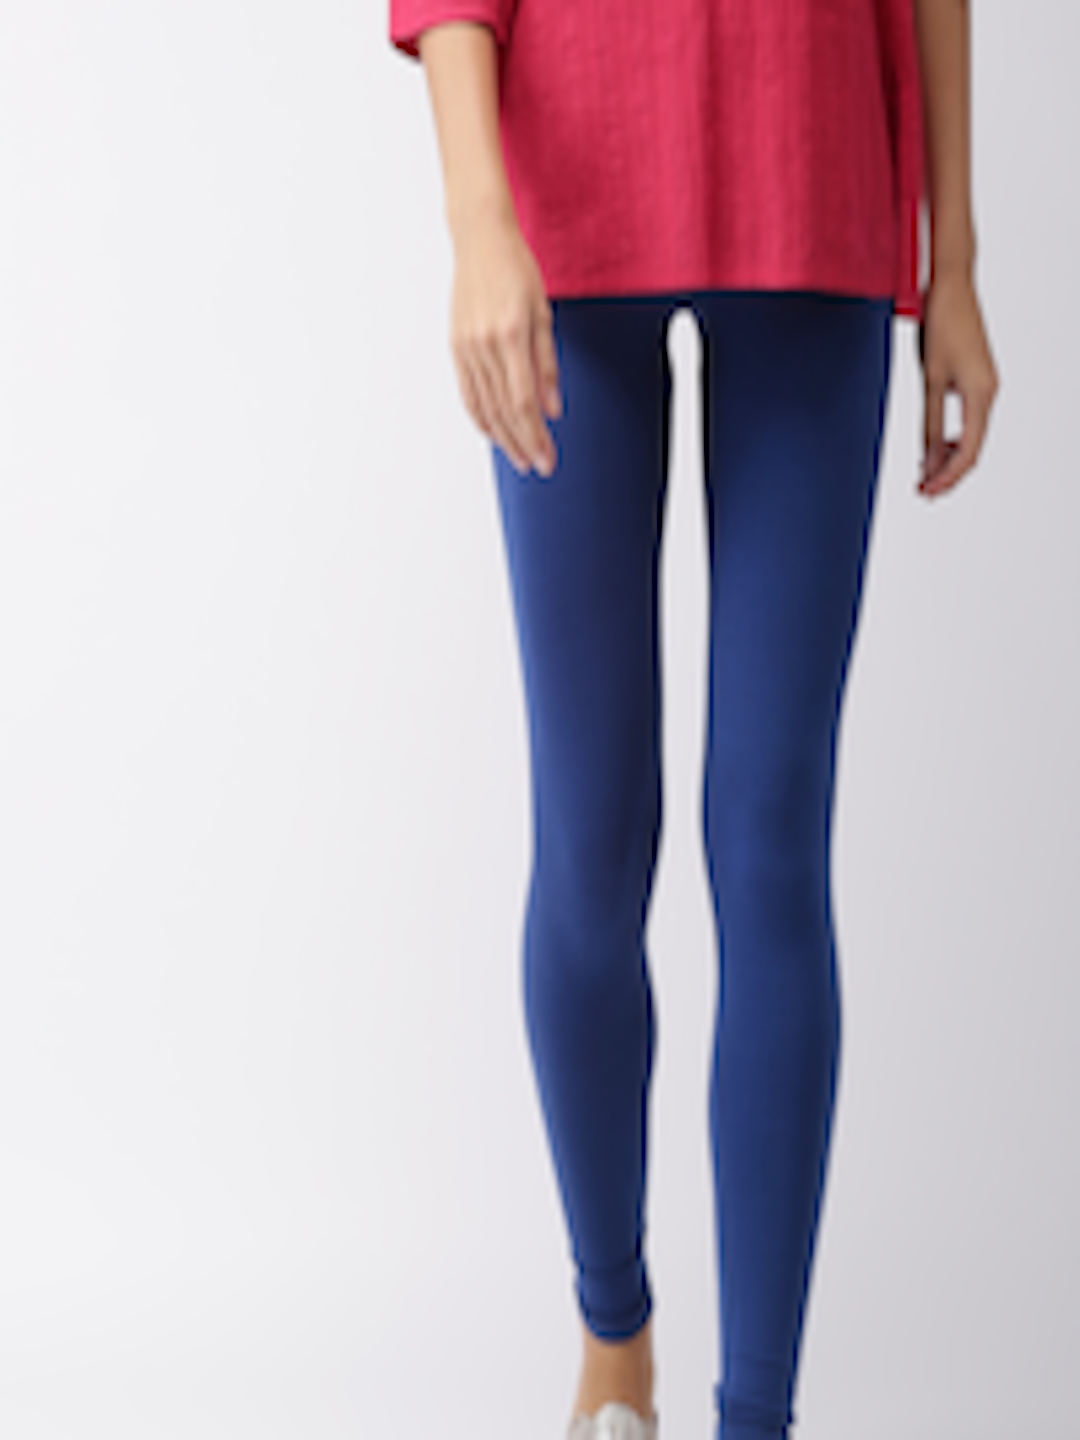 Buy go colors leggings women in India @ Limeroad-nextbuild.com.vn